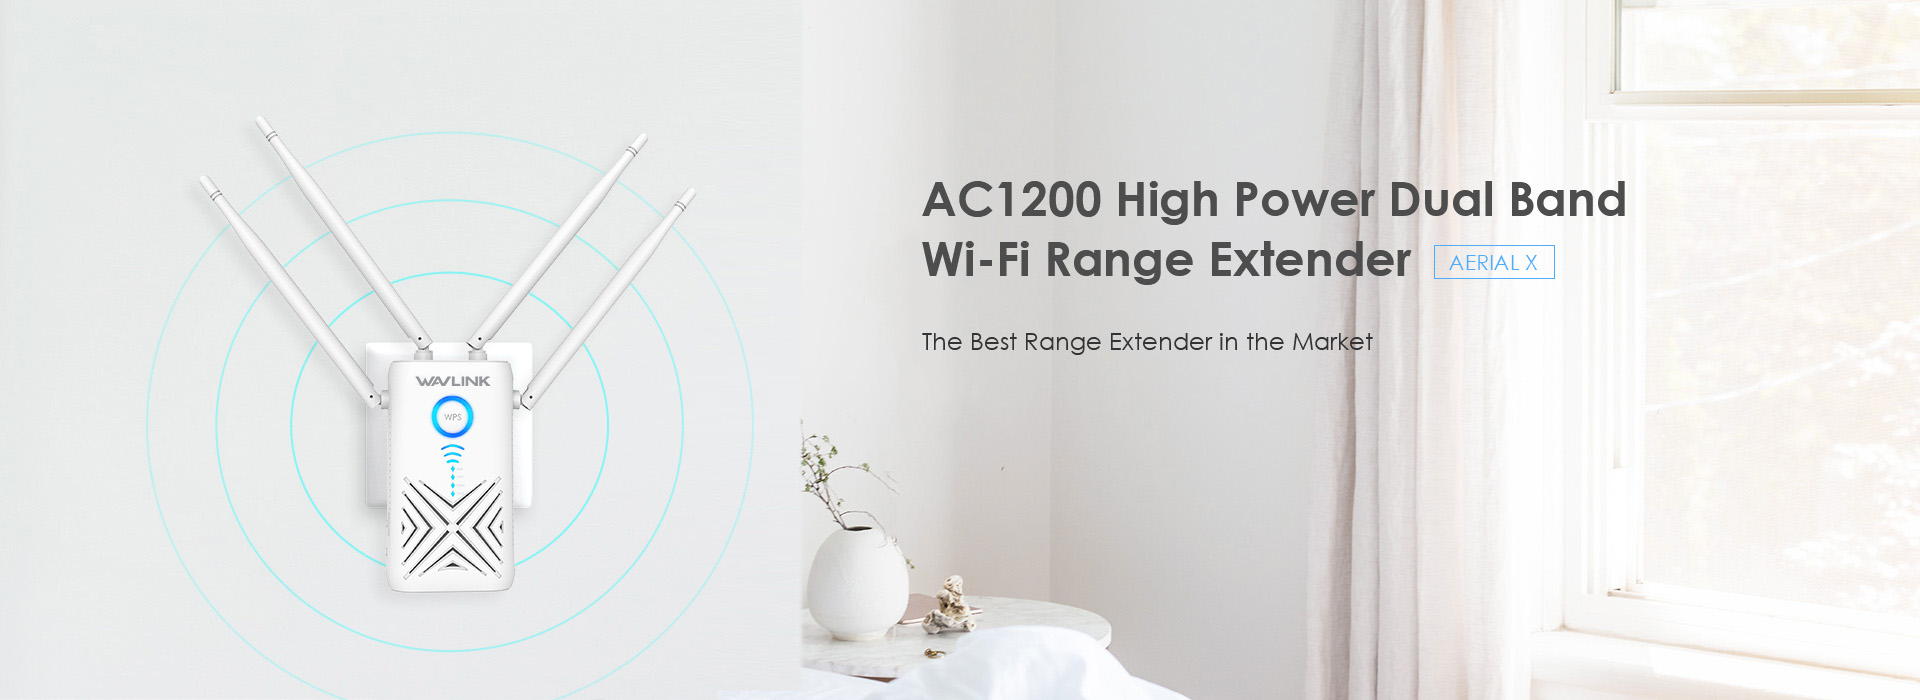 AERIAL X – AC1200 Dual-band Wireless AP/Range Extender/Router with Dual Giga LAN and High Gain Antennas